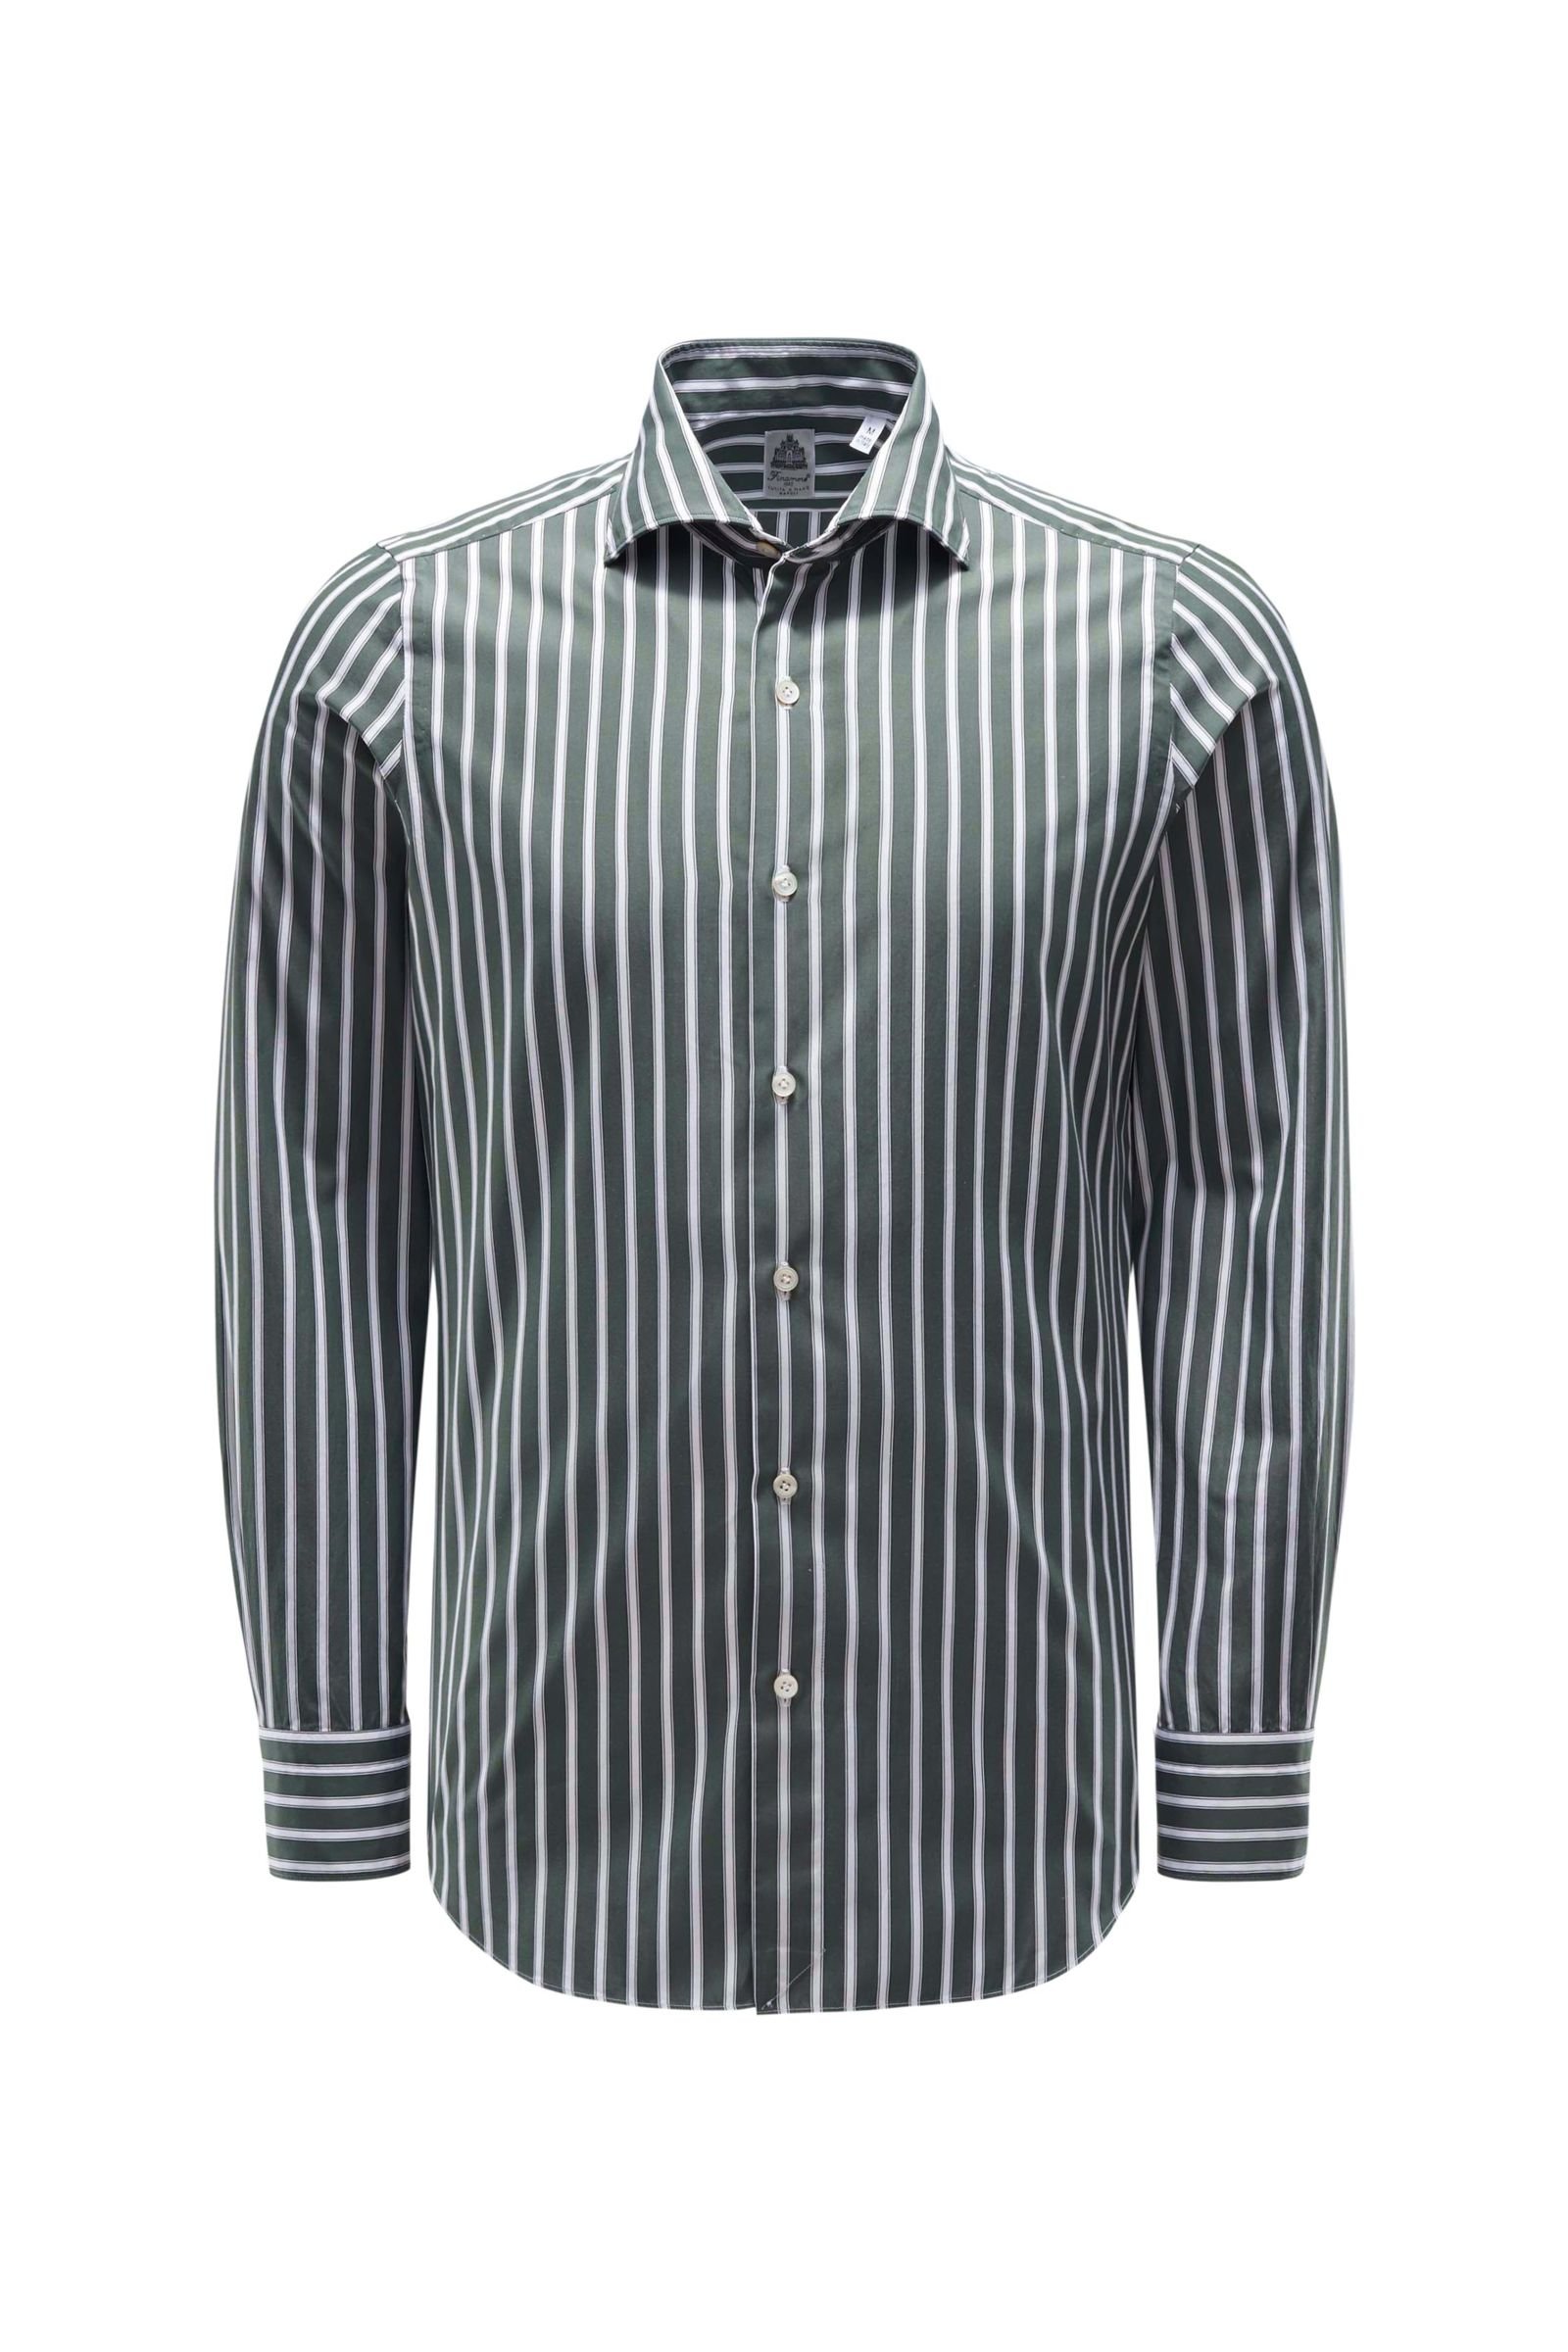 Casual shirt 'Simone Seattle' shark collar grey-green/white striped